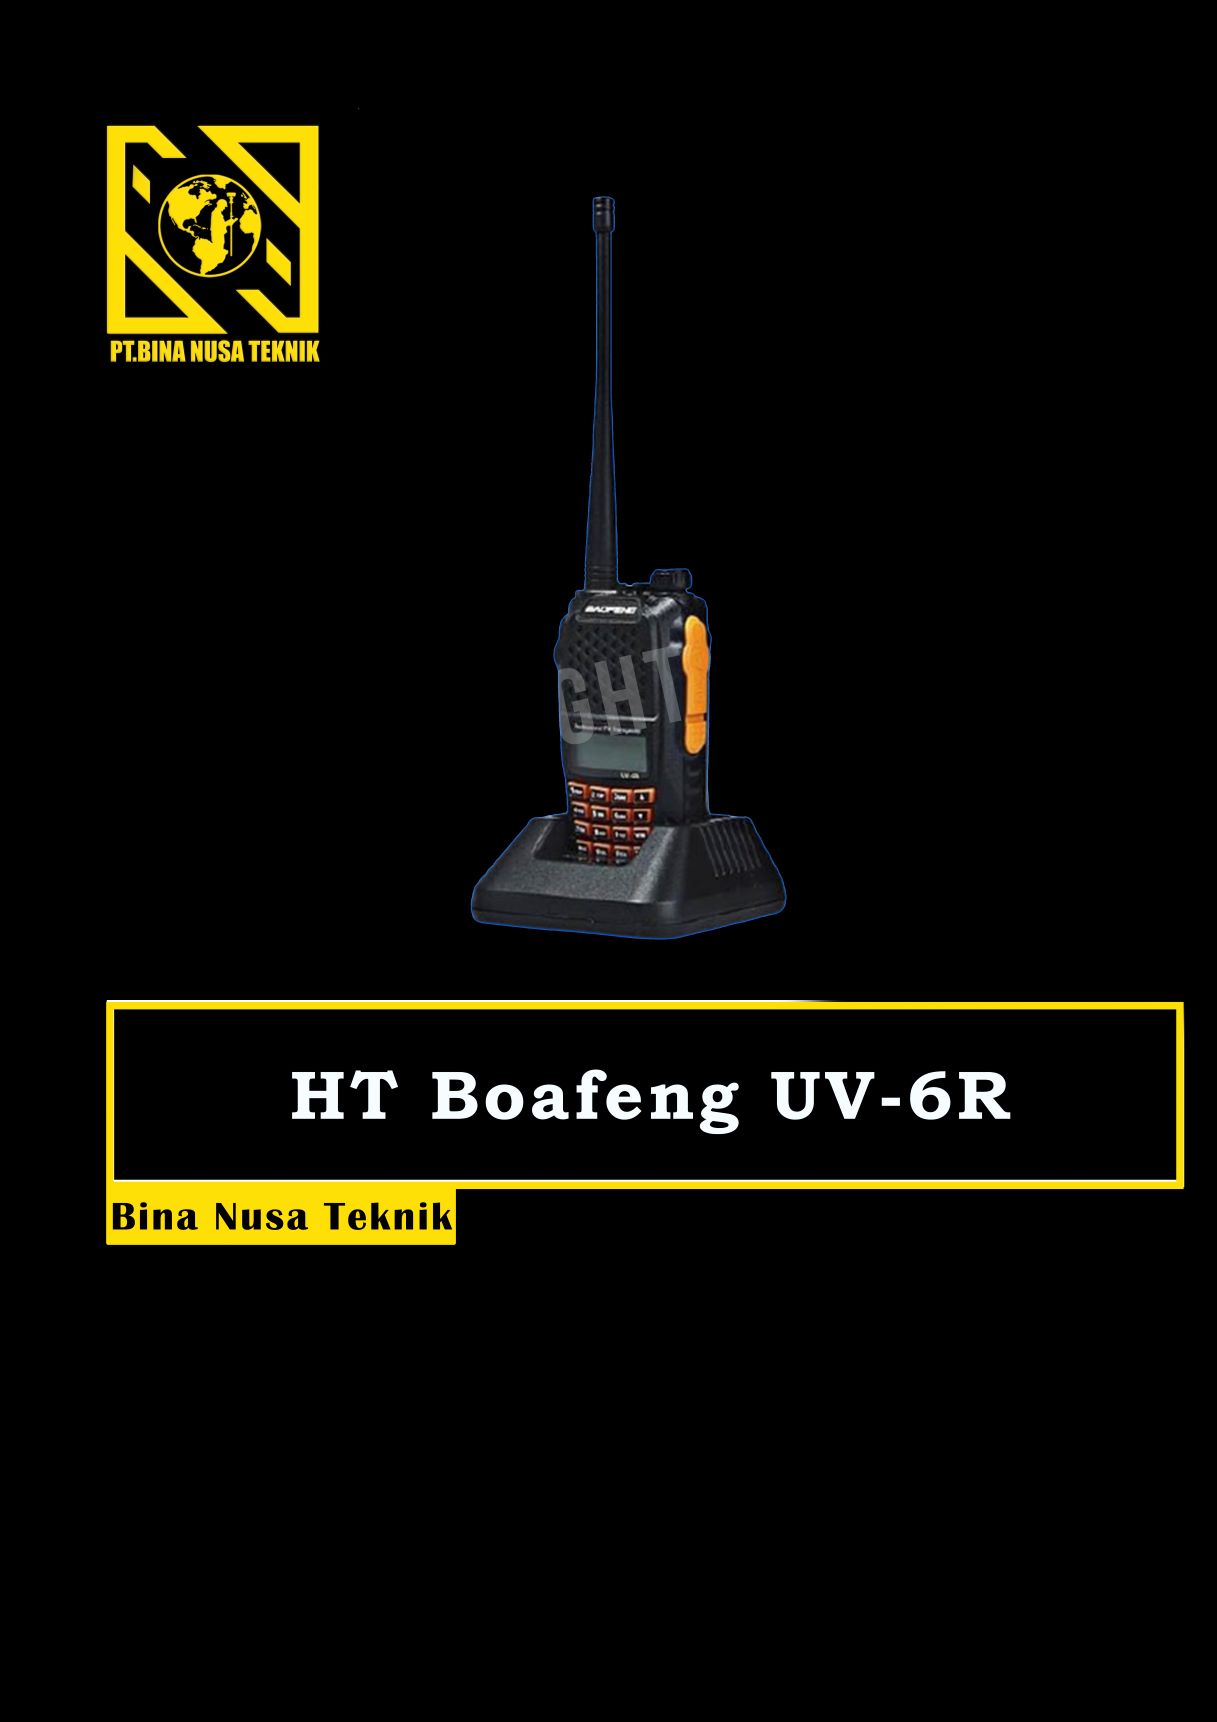 Handy Talkie Boafeng UV-6R